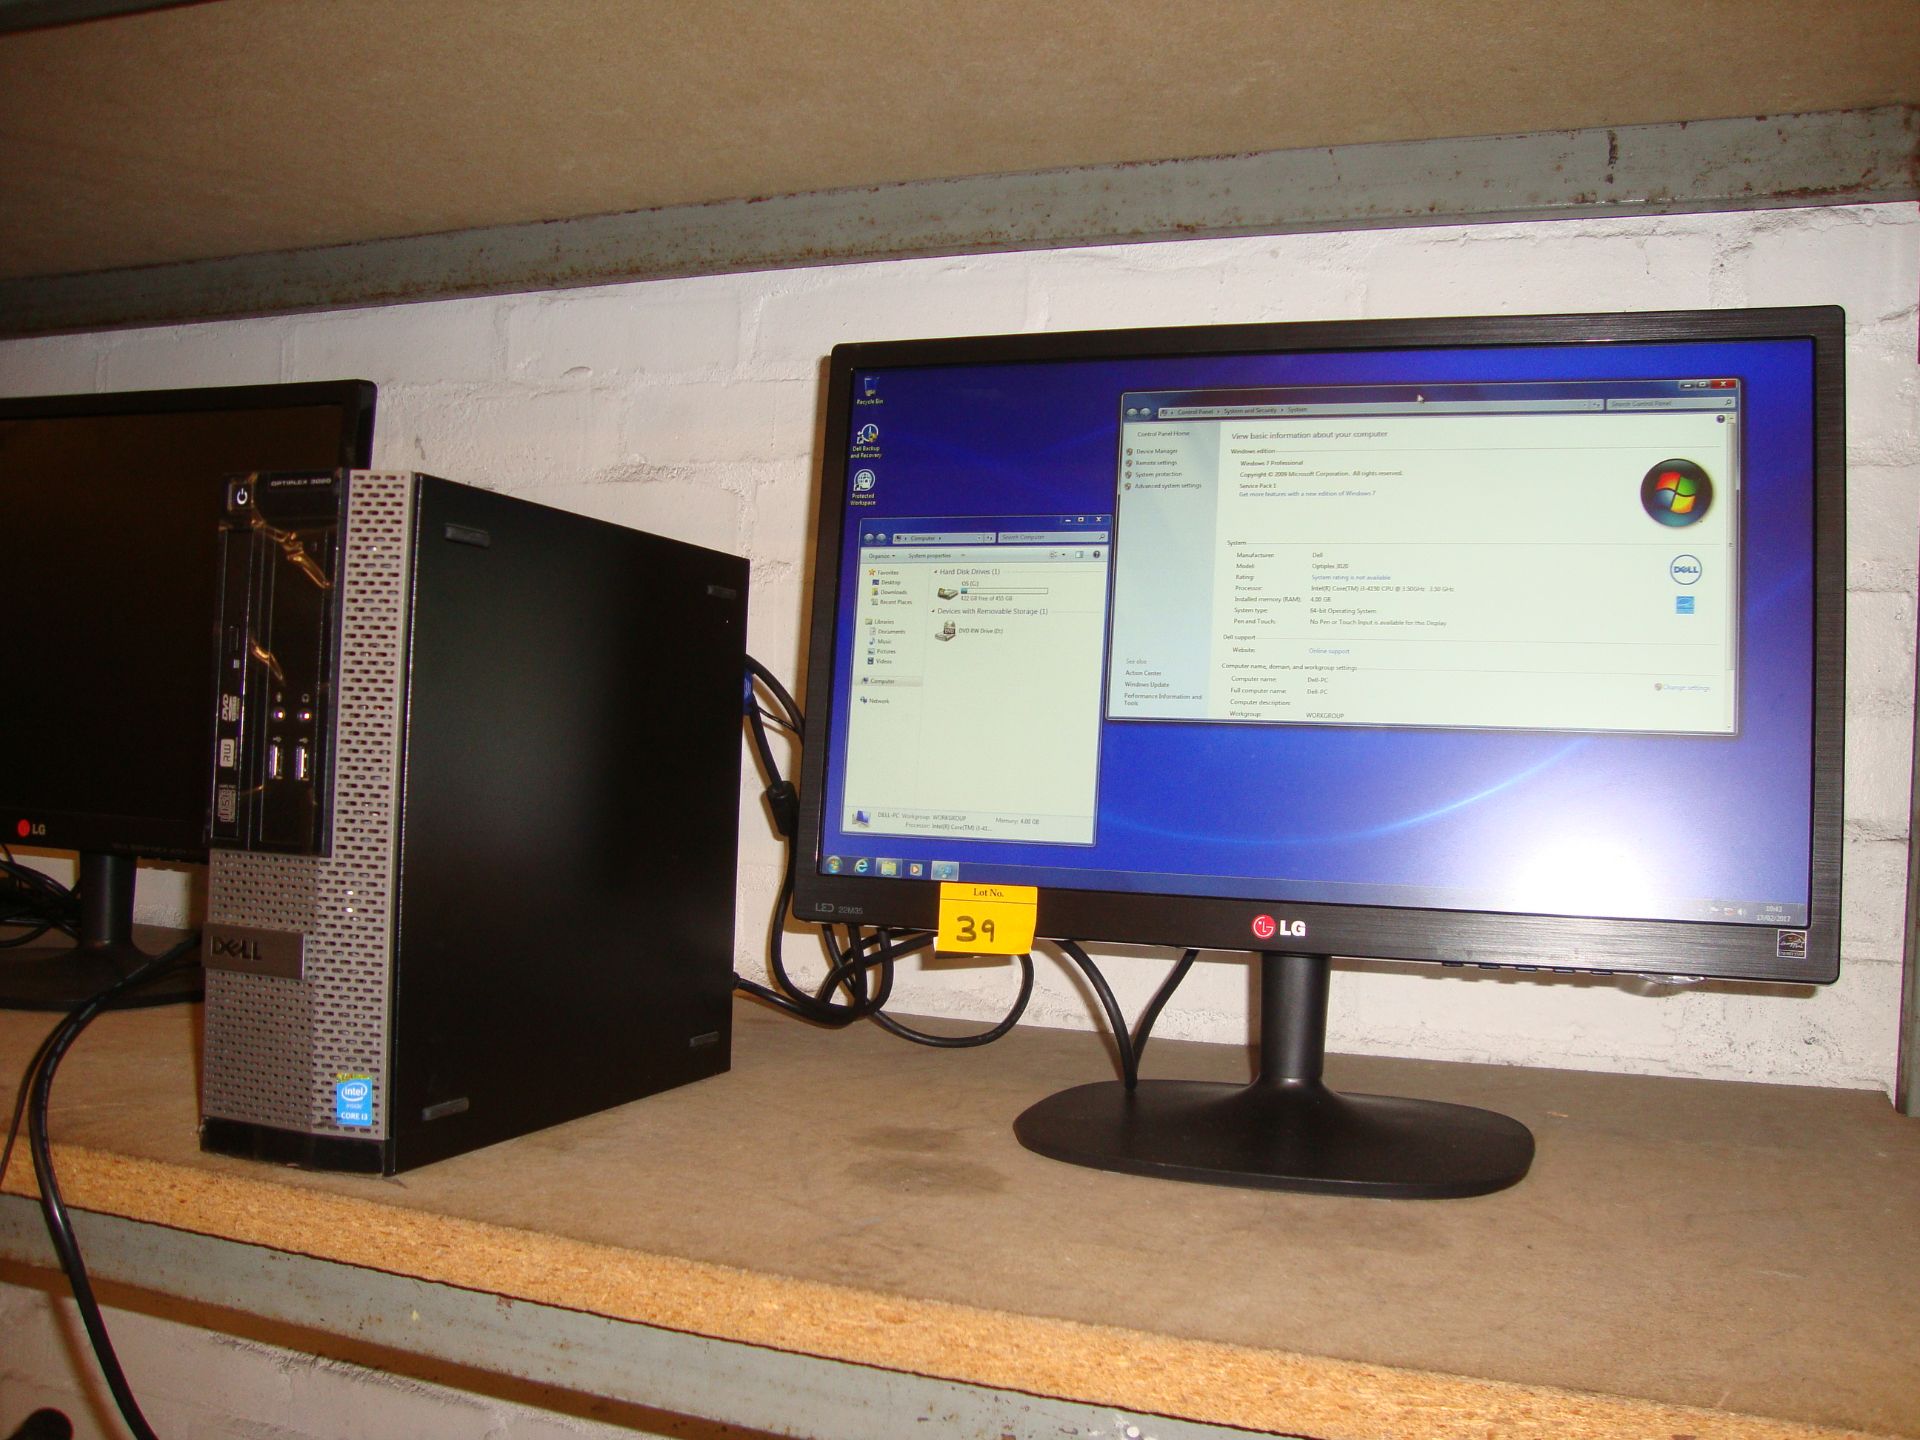 Dell Optiplex 3020 computer with Core i3-4150 processor, 4Gb RAM, 500Gb hard drive + LG 22" Monitor